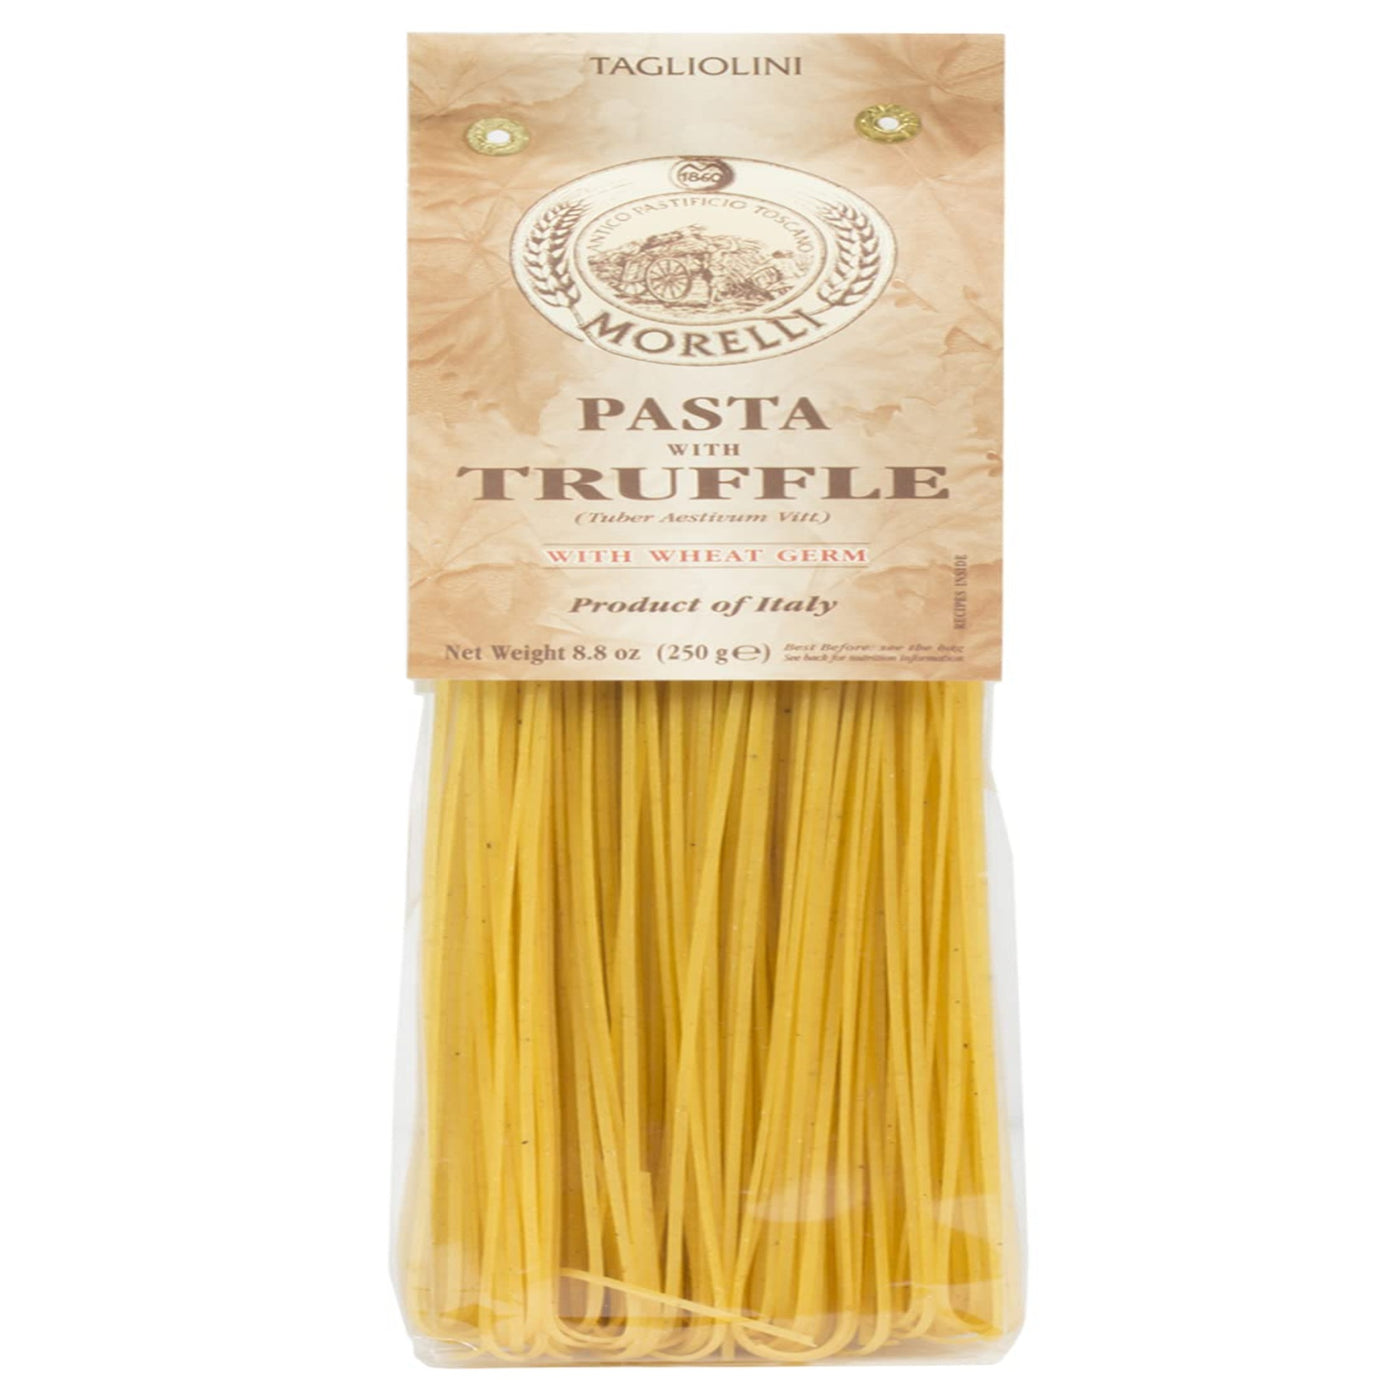 Truffle Tagliolini, Organic, Morelli, 8.8 oz